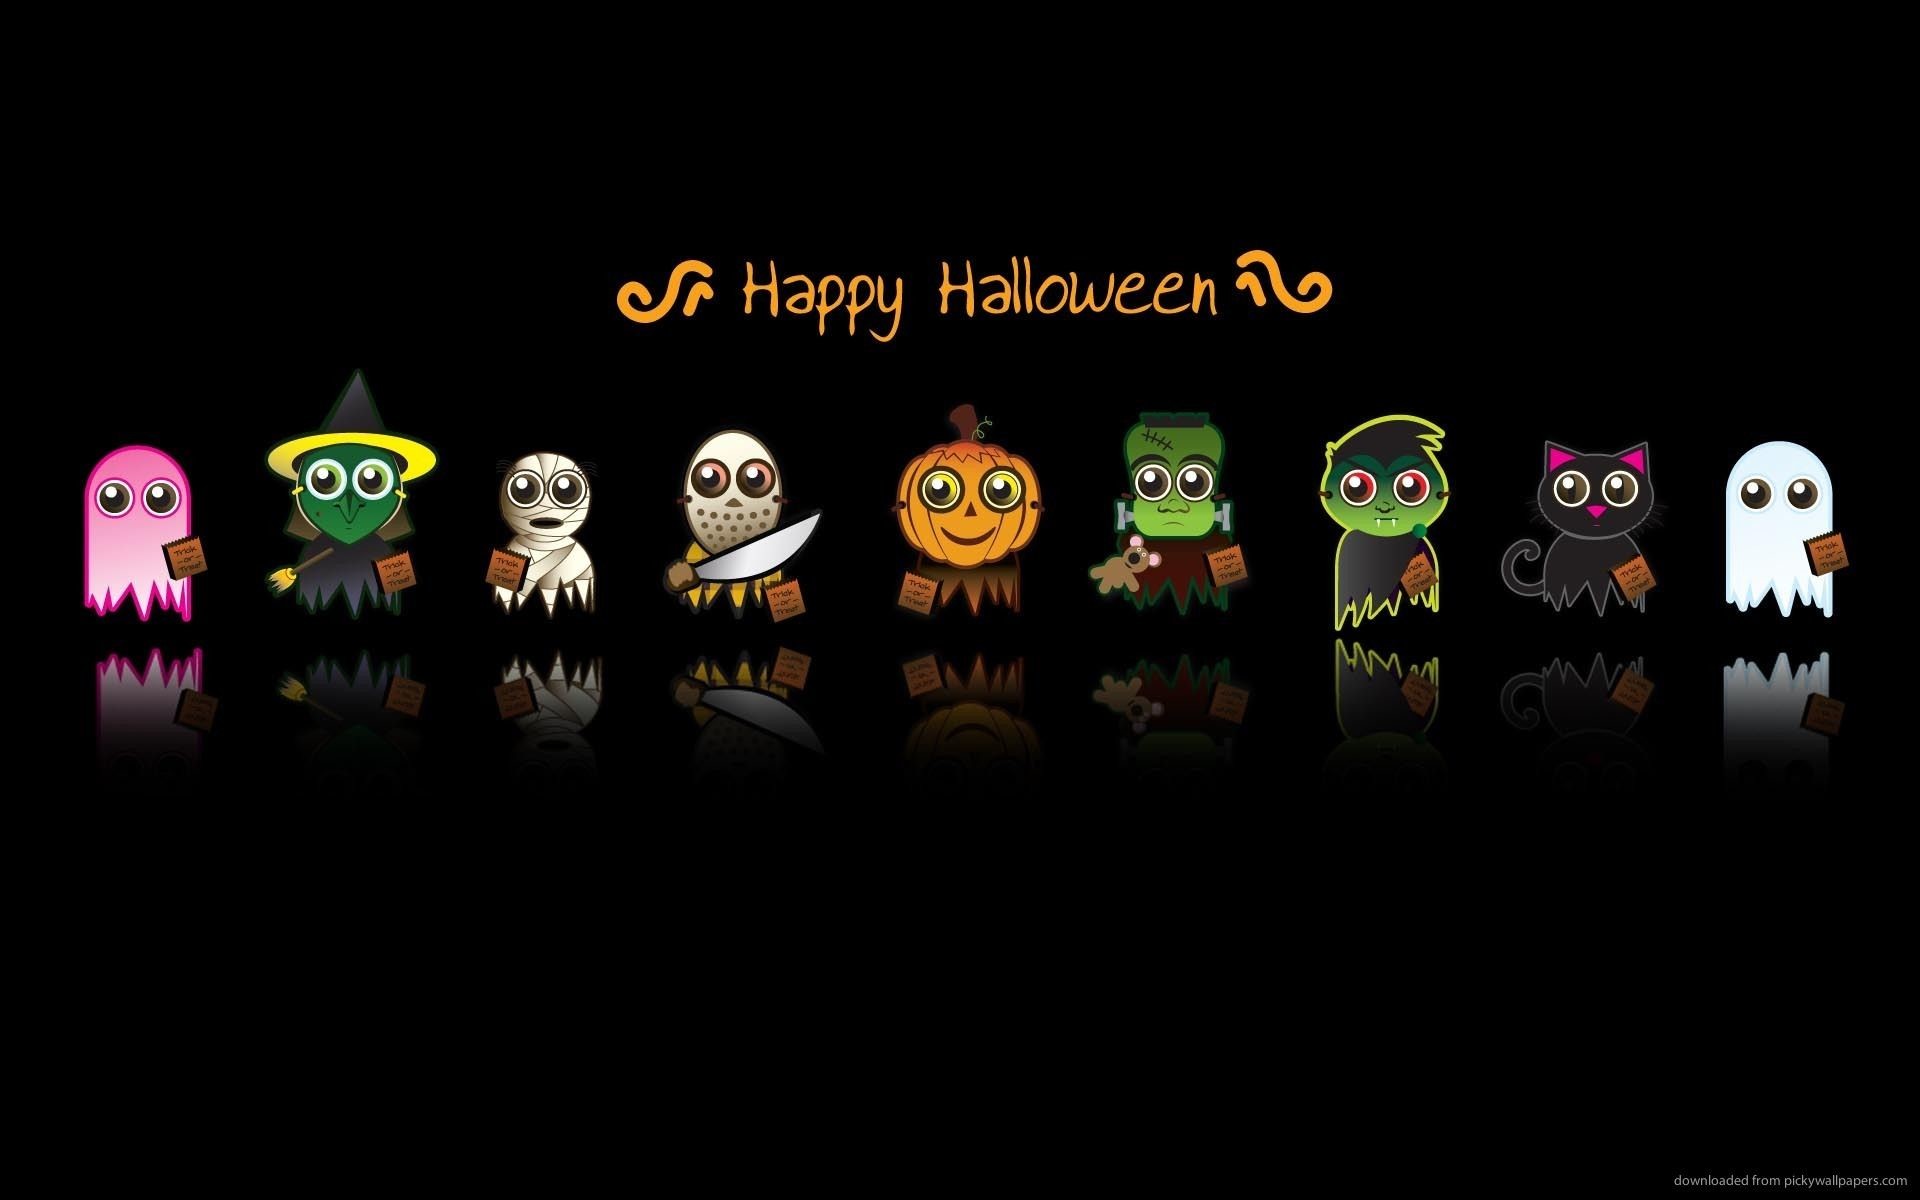 1920x1200 Backgrounds For Humorous Halloween Desktop Backgrounds www